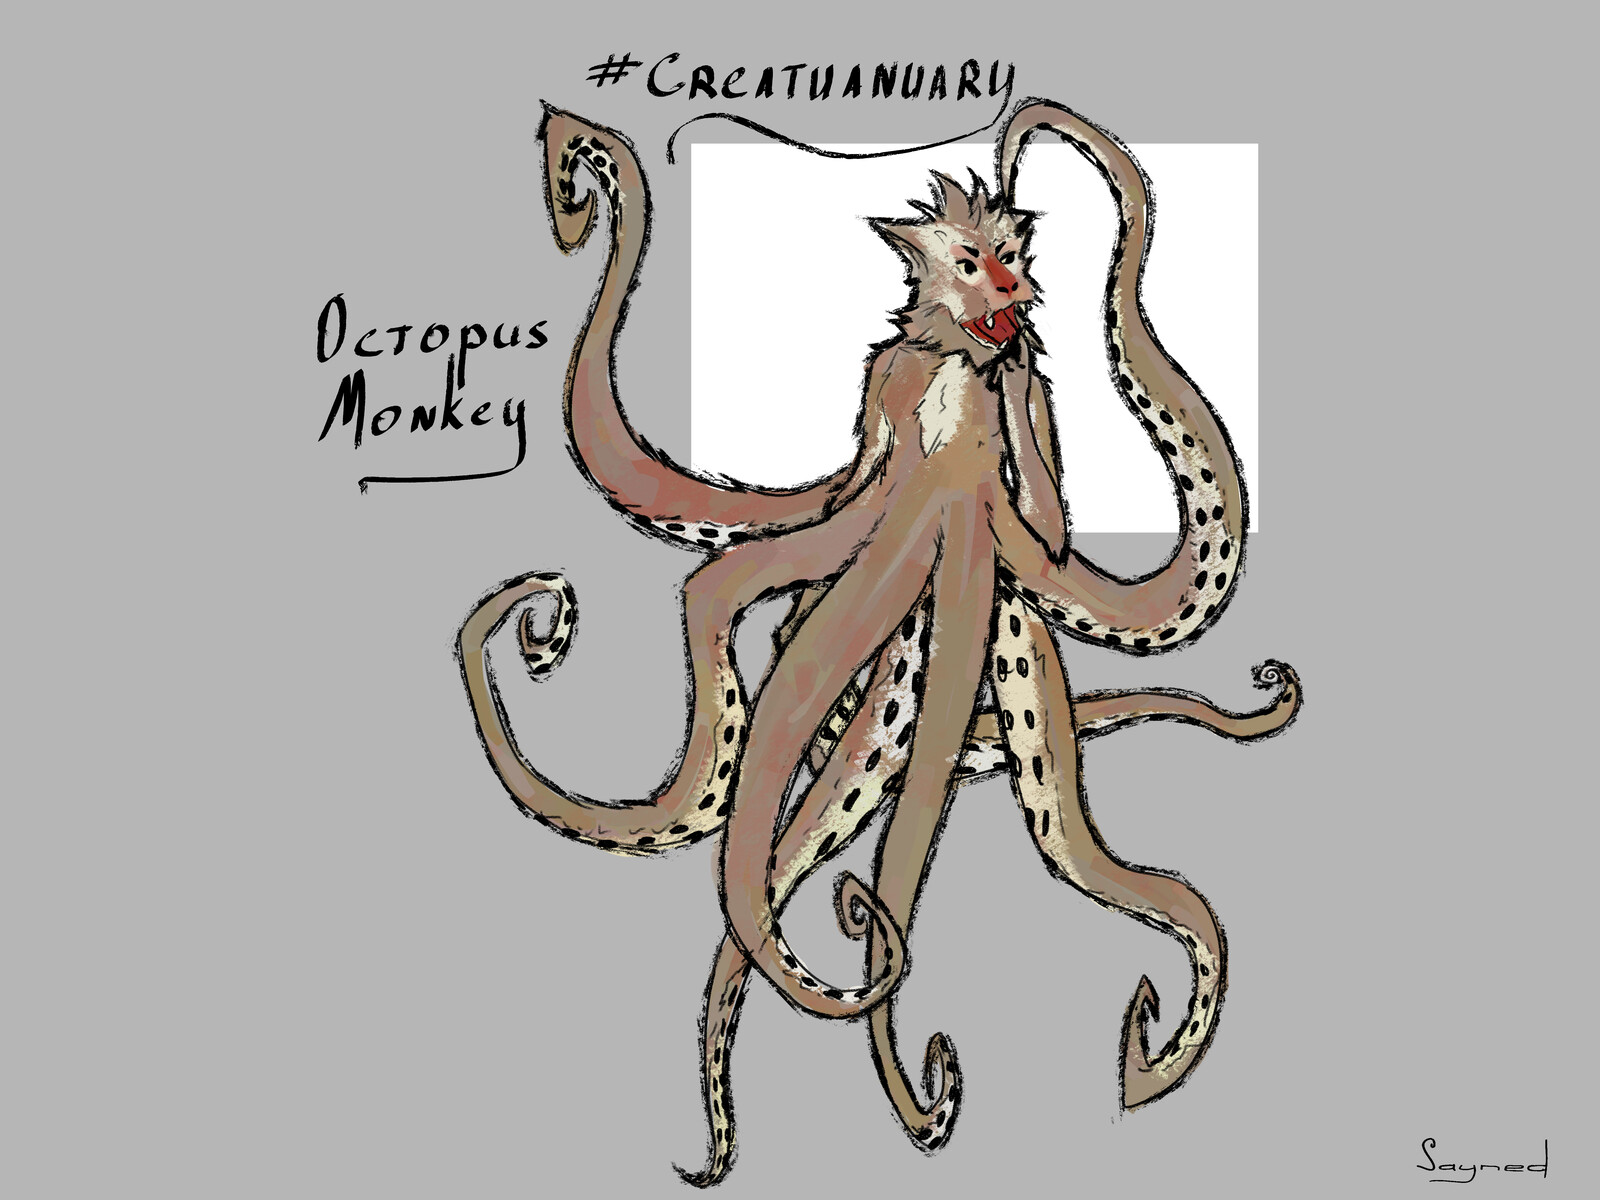 Day 3. Octopus Monkey